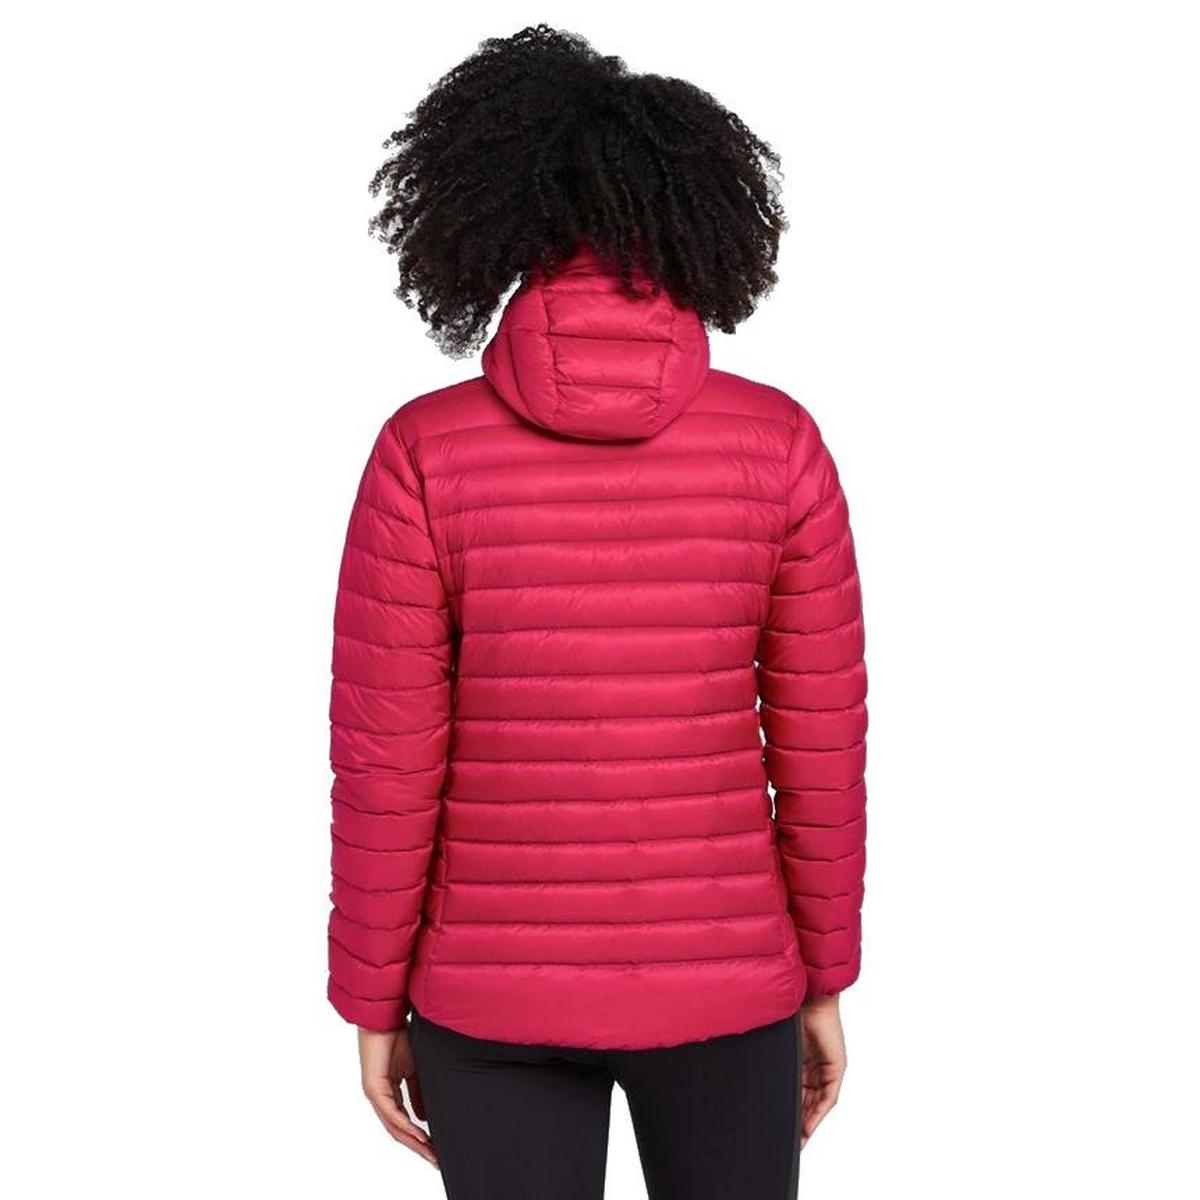 OEX Women's Kintra Down Jacket - Pink